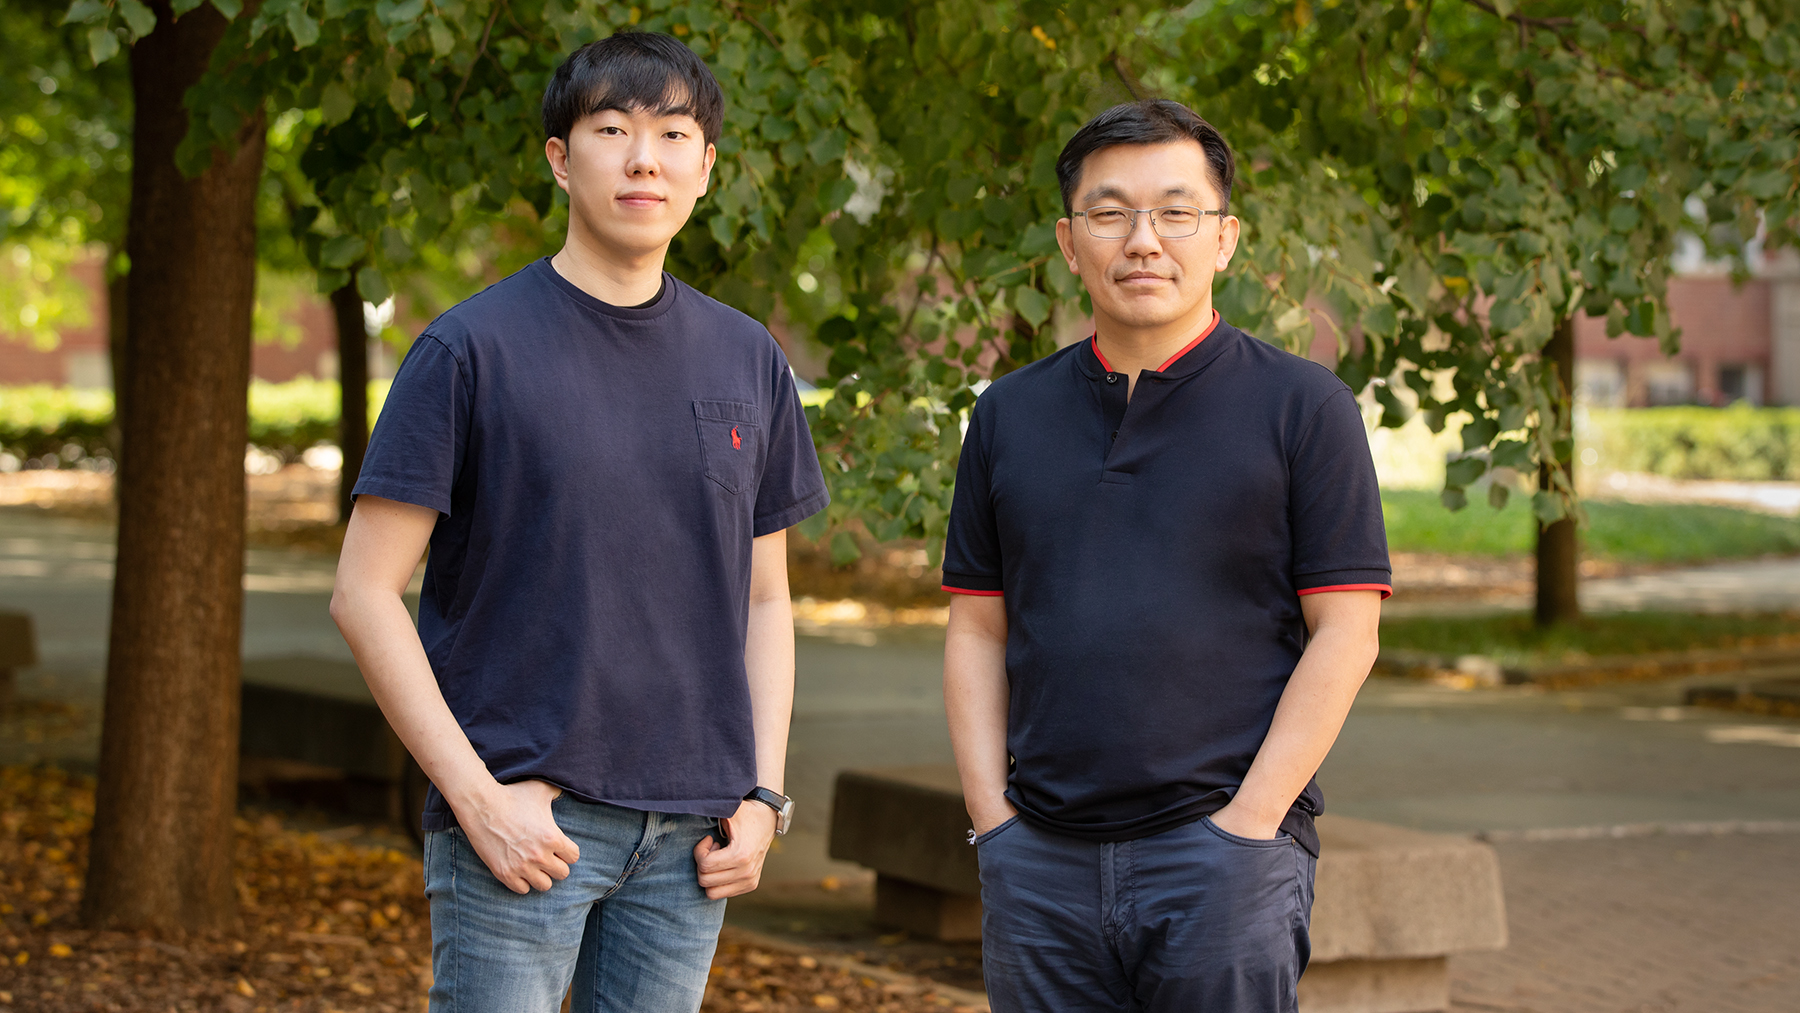 Postdoctoral researcher Byoungsoo Kim and professor Hyunjoon Kong. Photo by L. Brian Stauffer